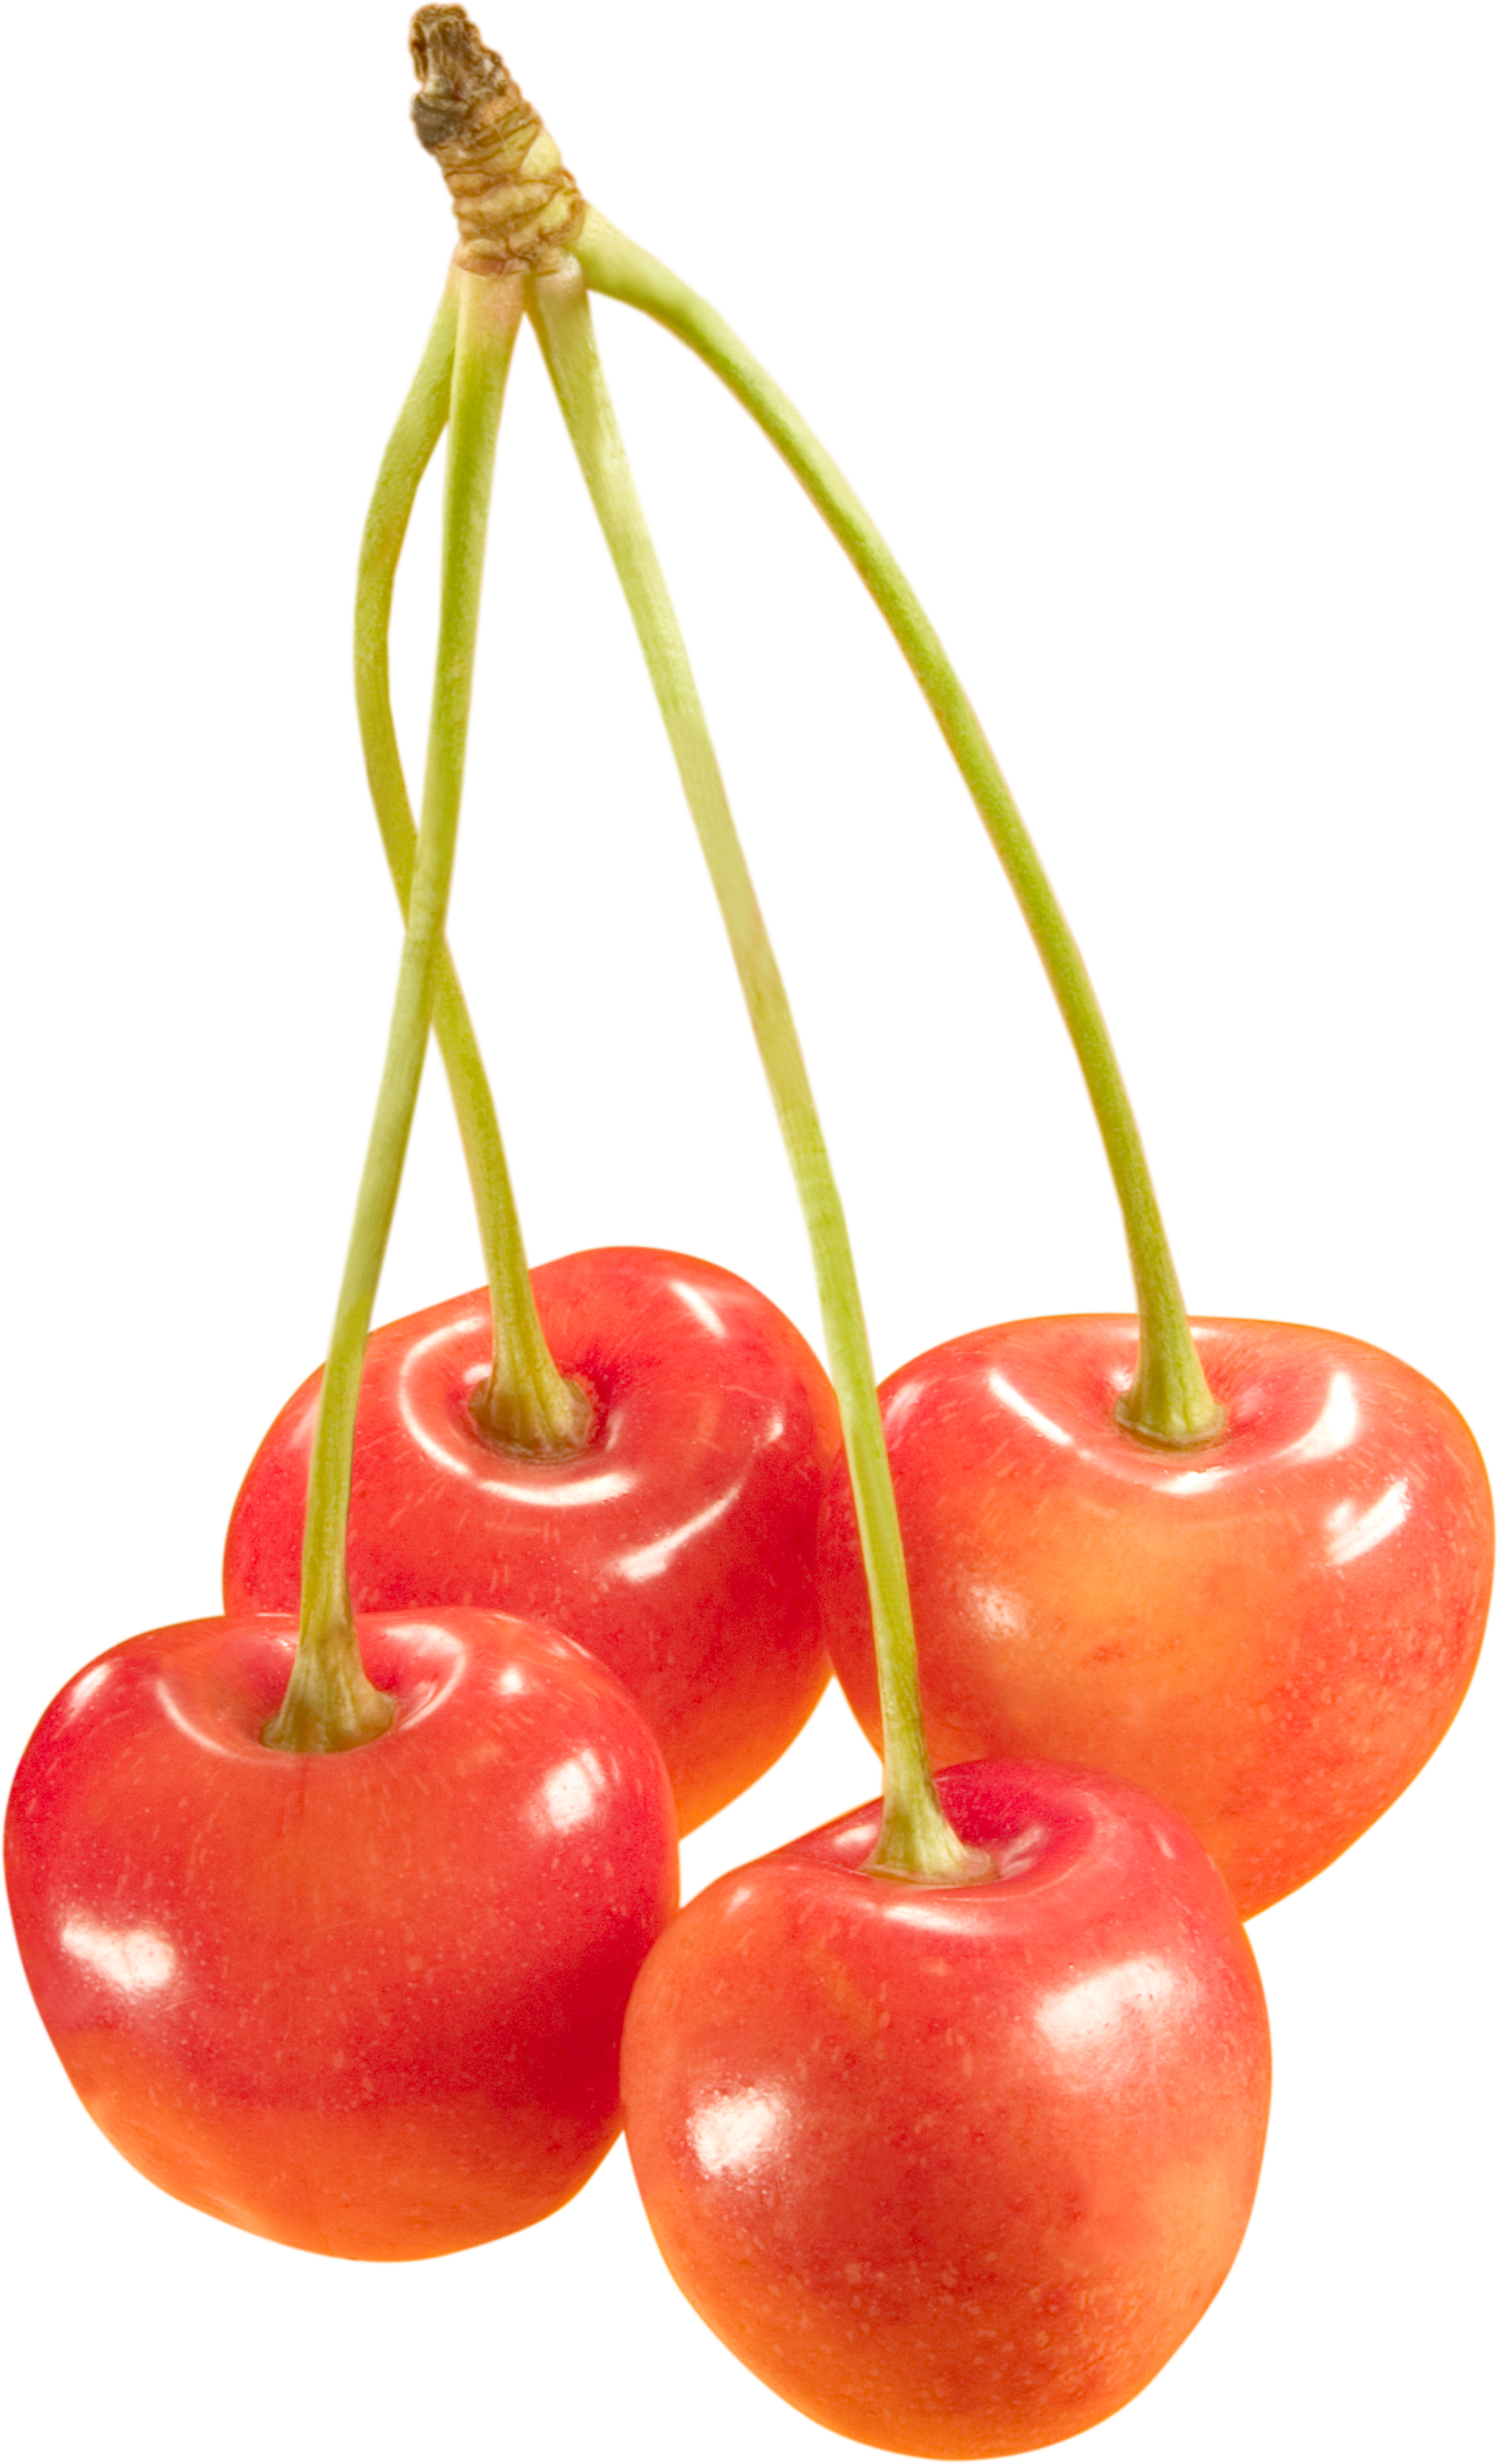 cherries PNG image